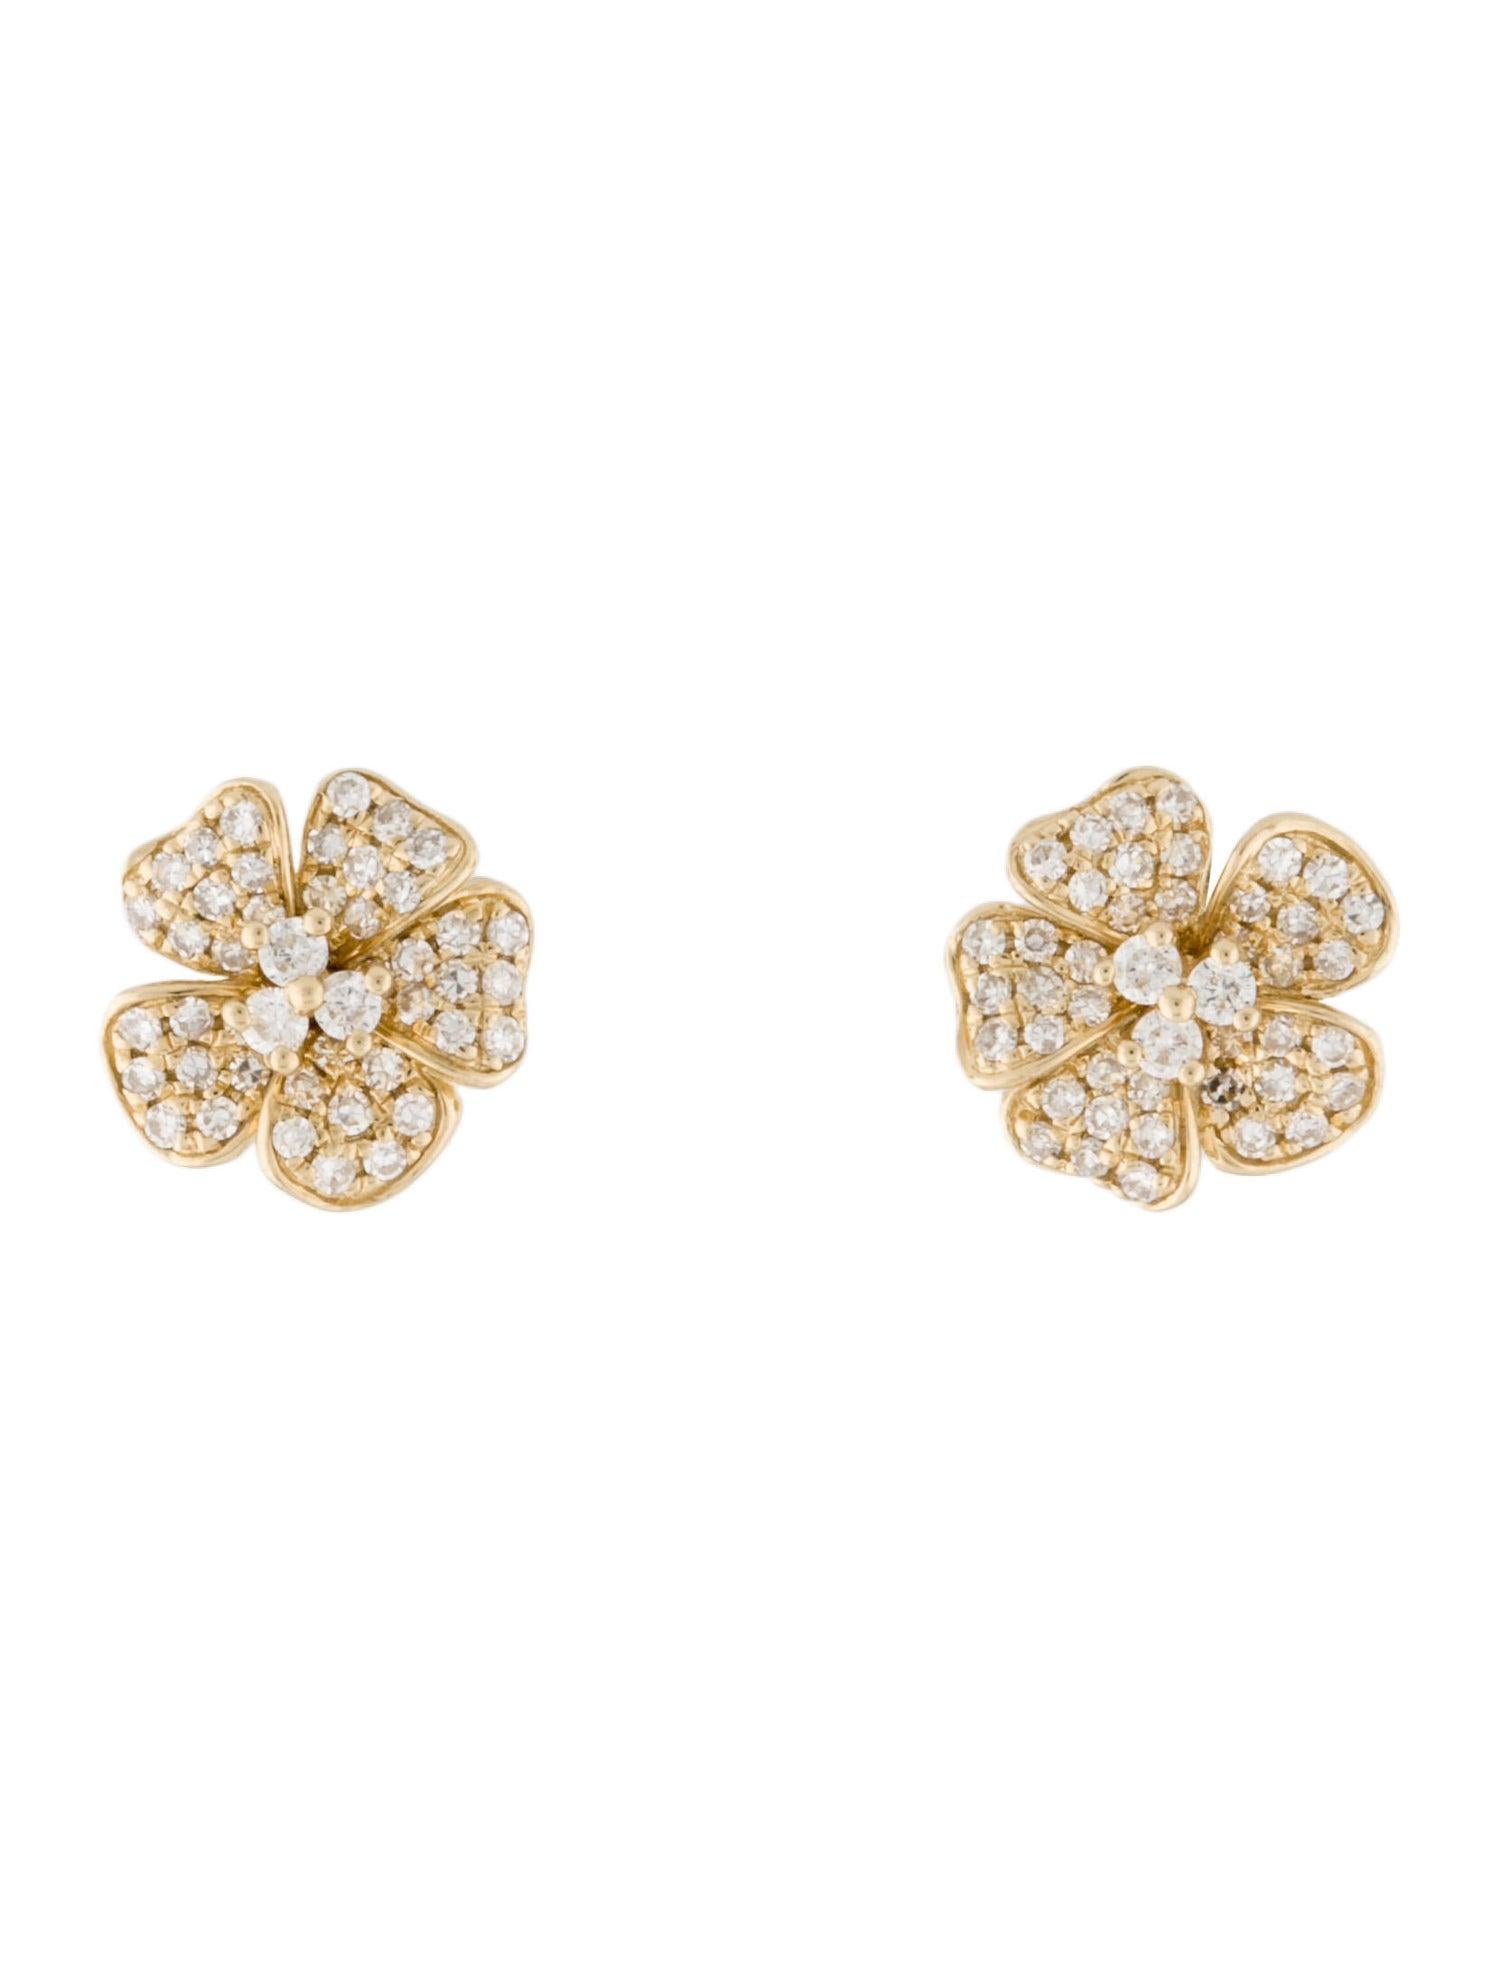 14 Karat Yellow Gold 0.34 Carat Diamond Flower Stud Earrings For Sale 2